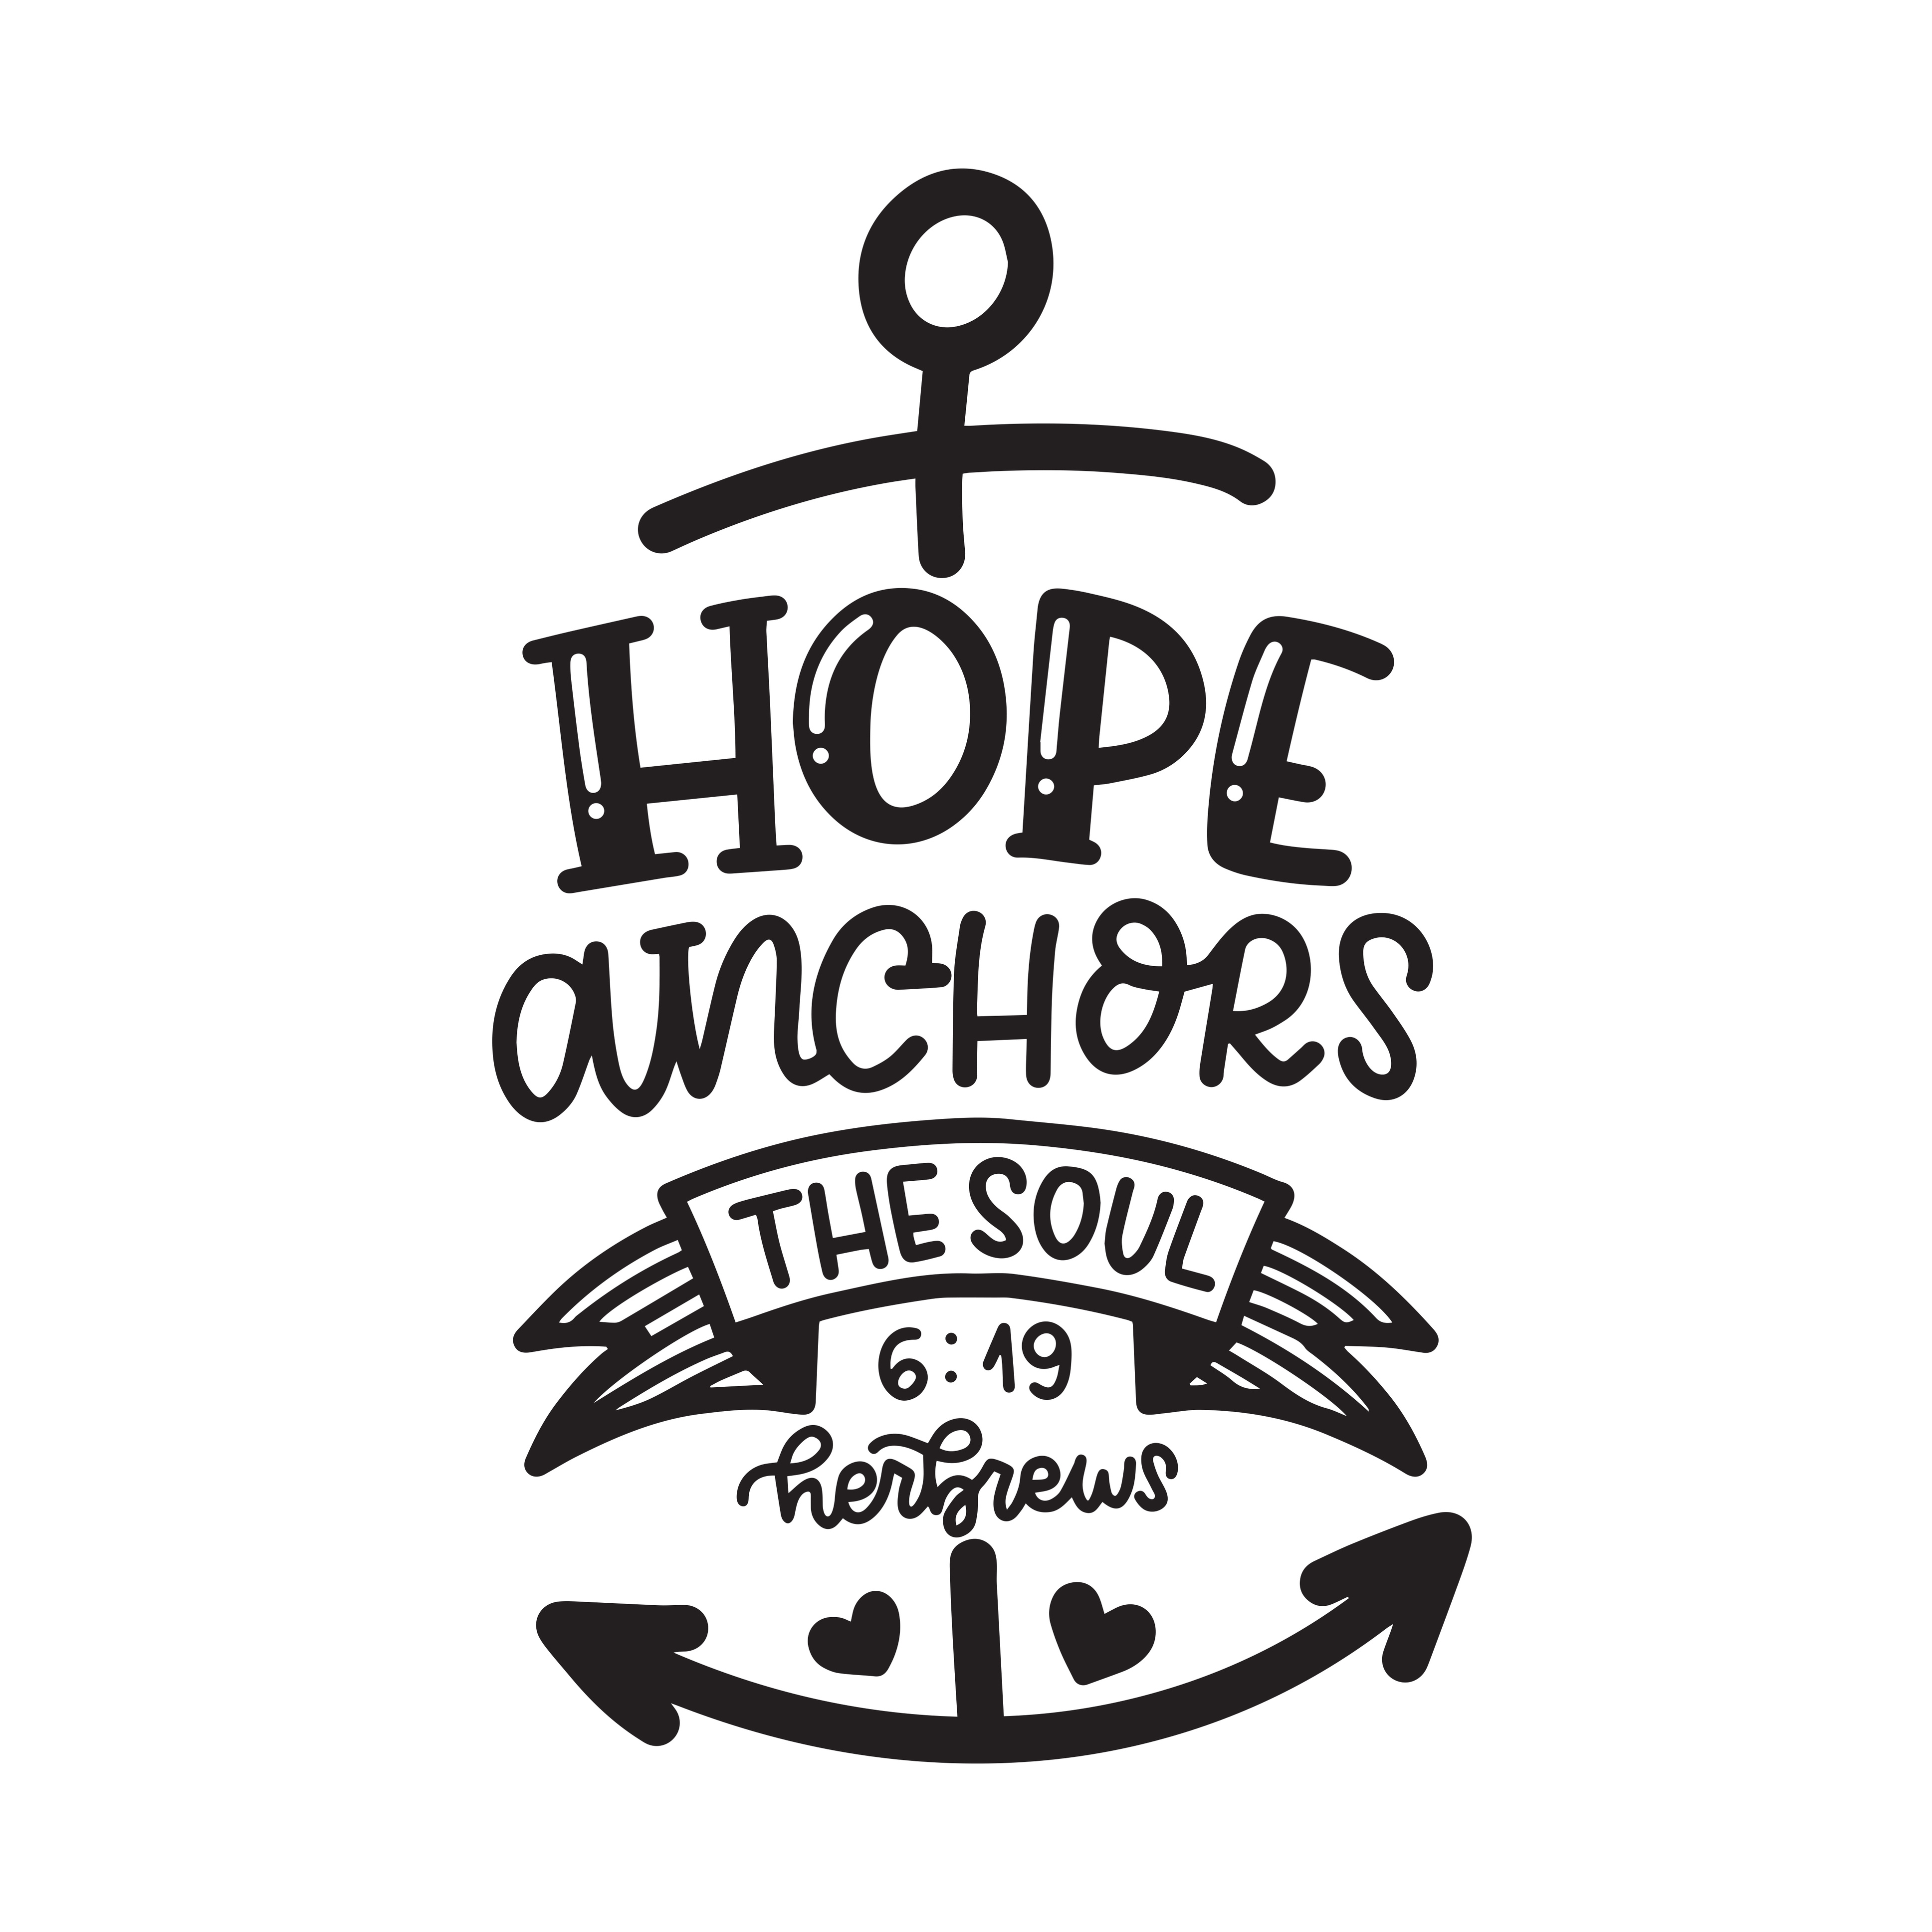 6:19 Hebrews scripture hope anchors the soul. 